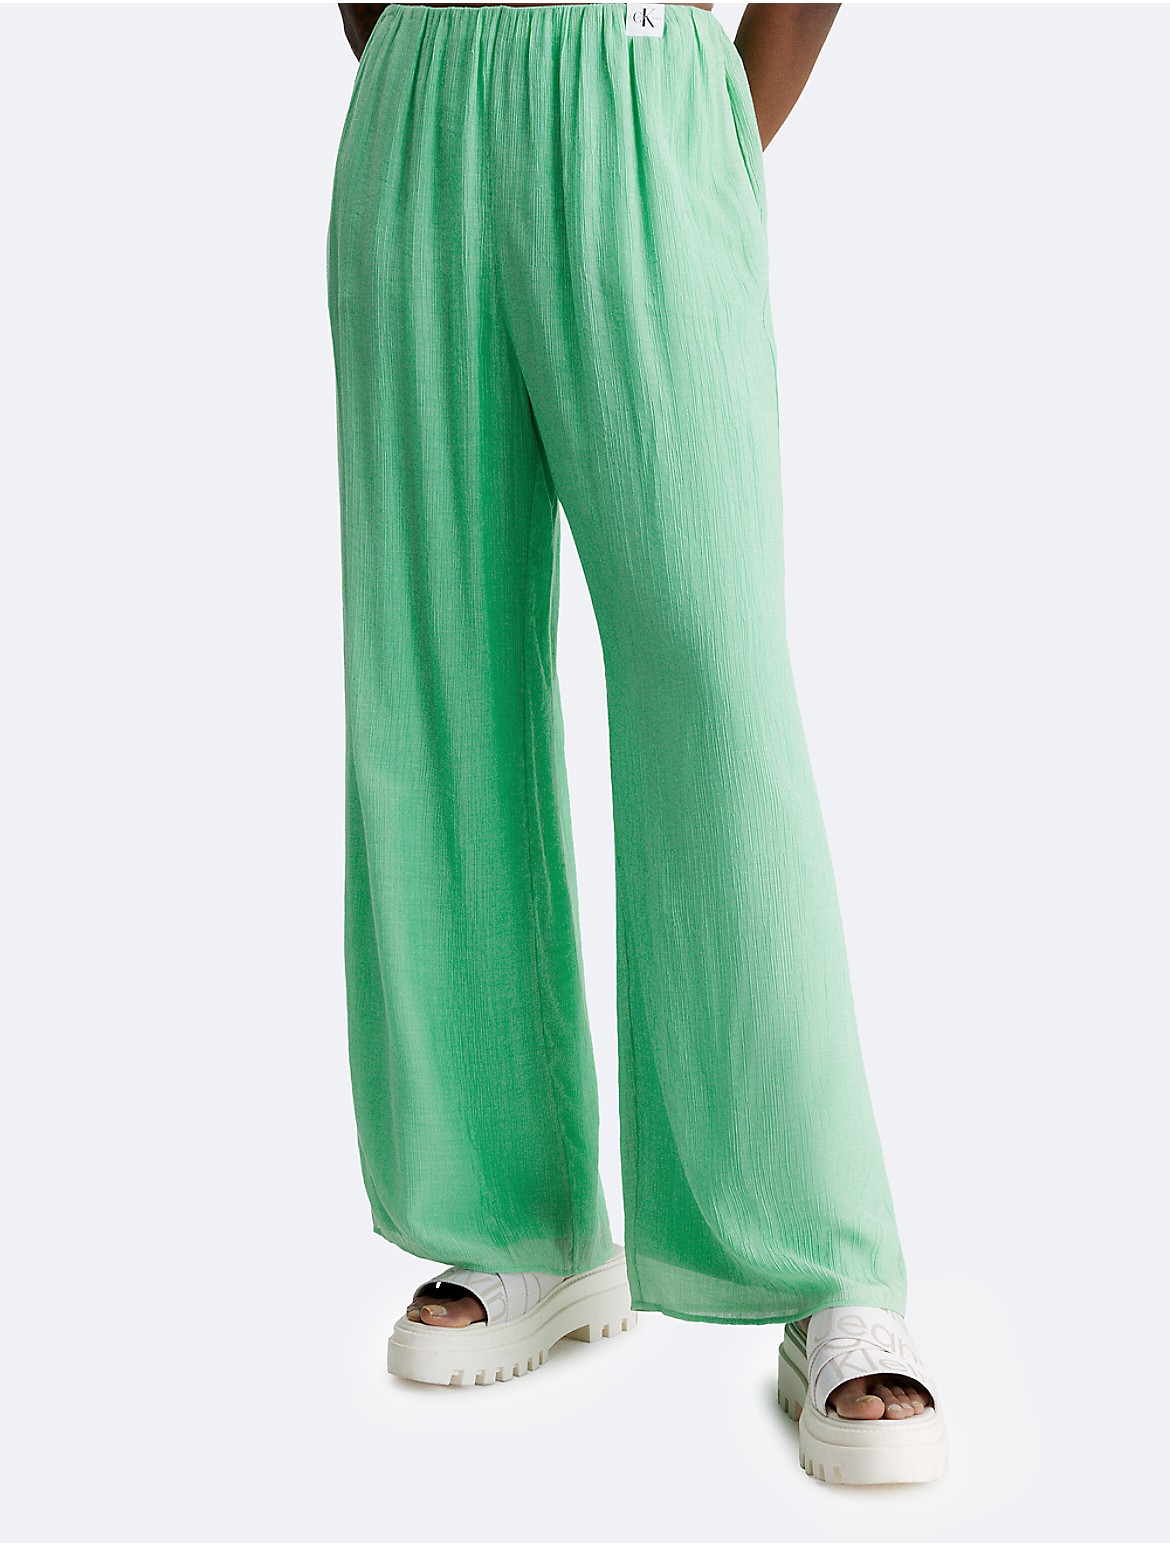 Calvin Klein Women's Crinkle High Waist Straight Fit Pants - Green - S